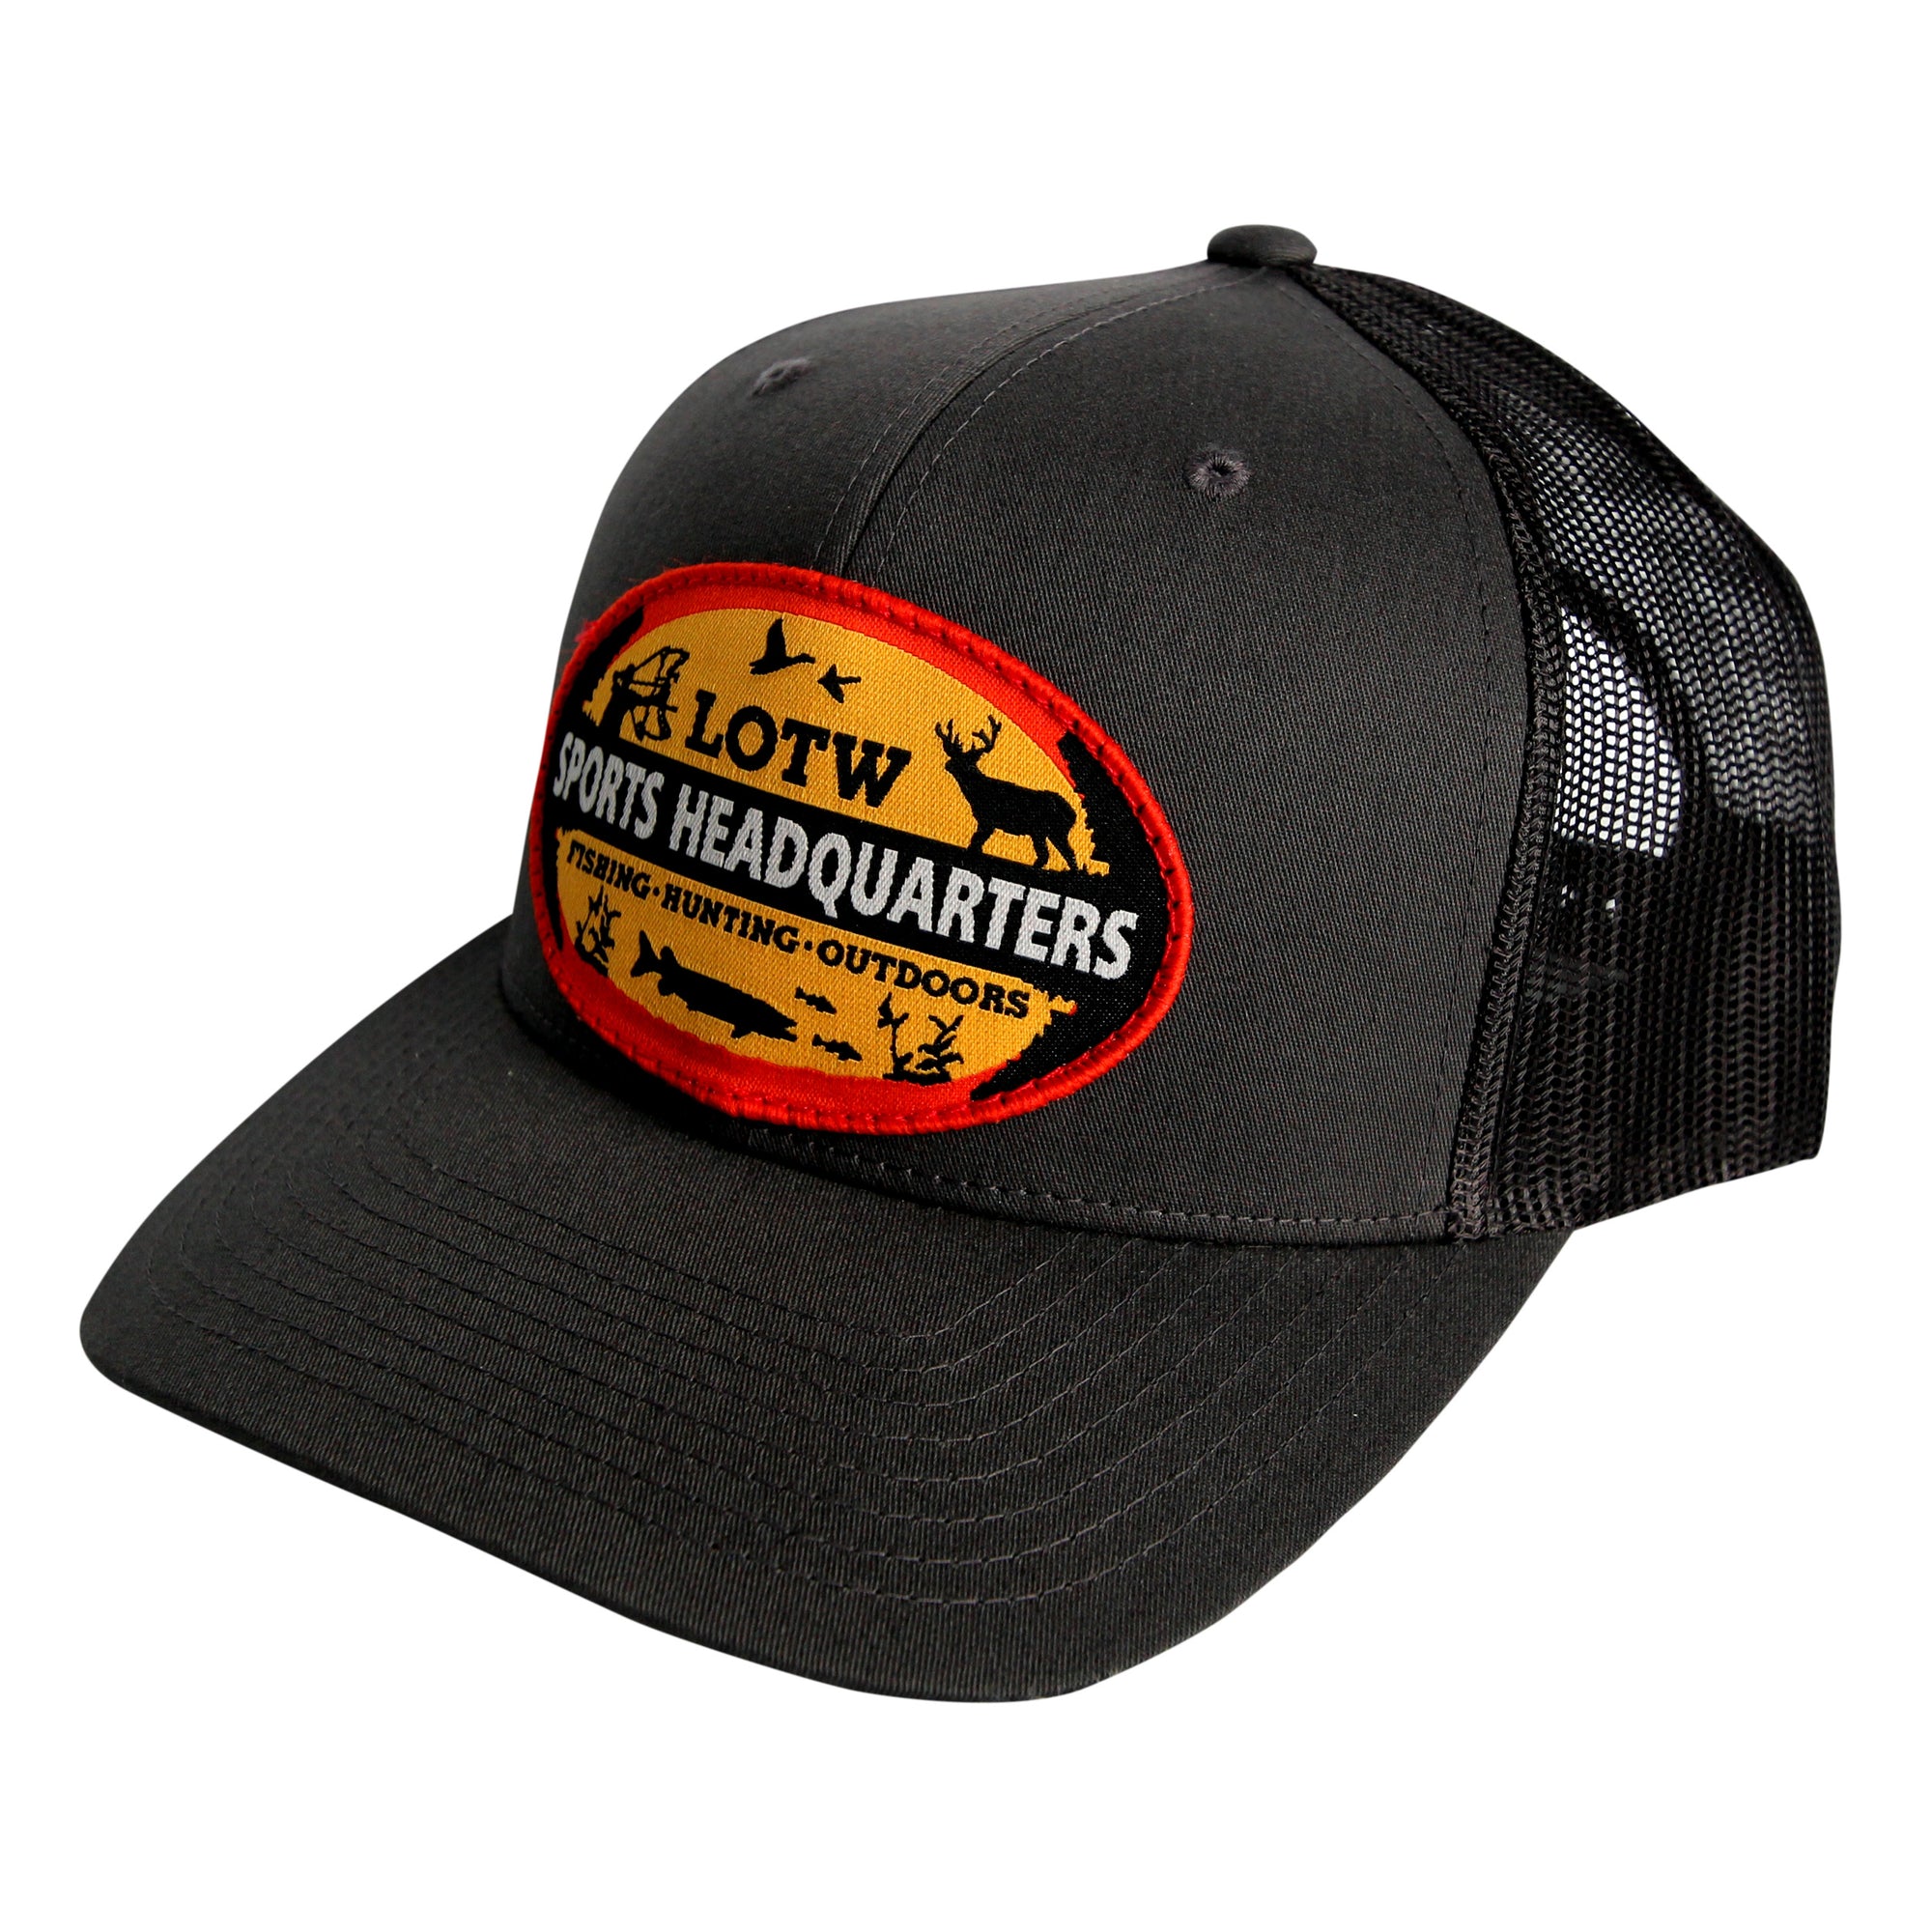 LOTW Sports Headquarters Retro Snapback Trucker Hats - Caramel